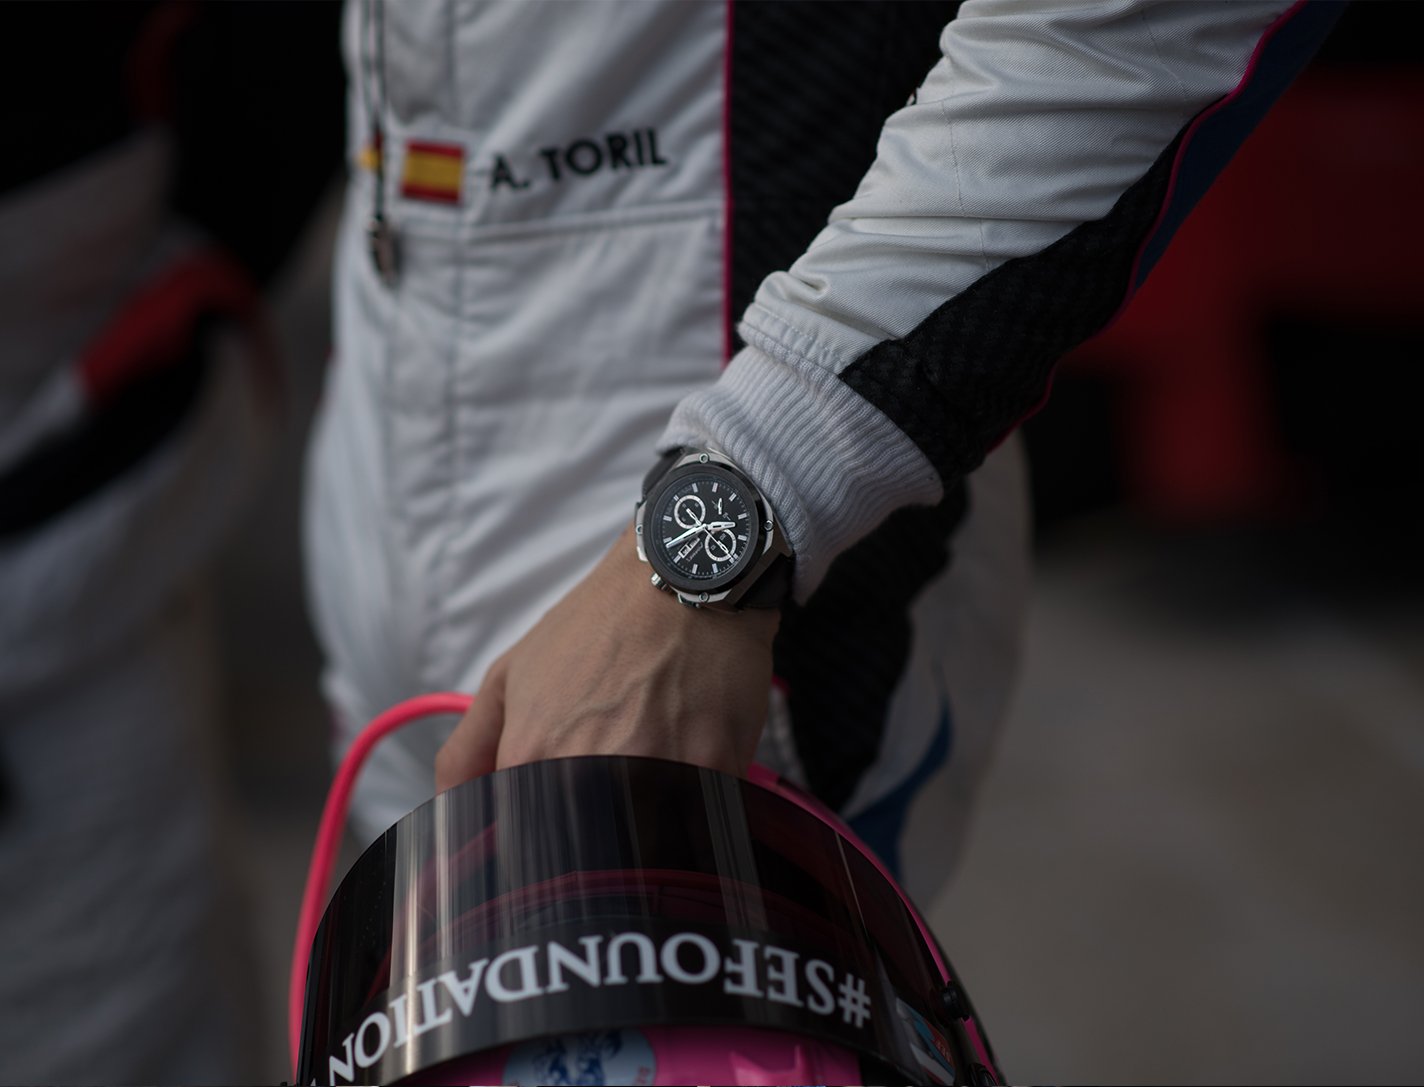 alex toril formex ambassador wearing a formex sport watch